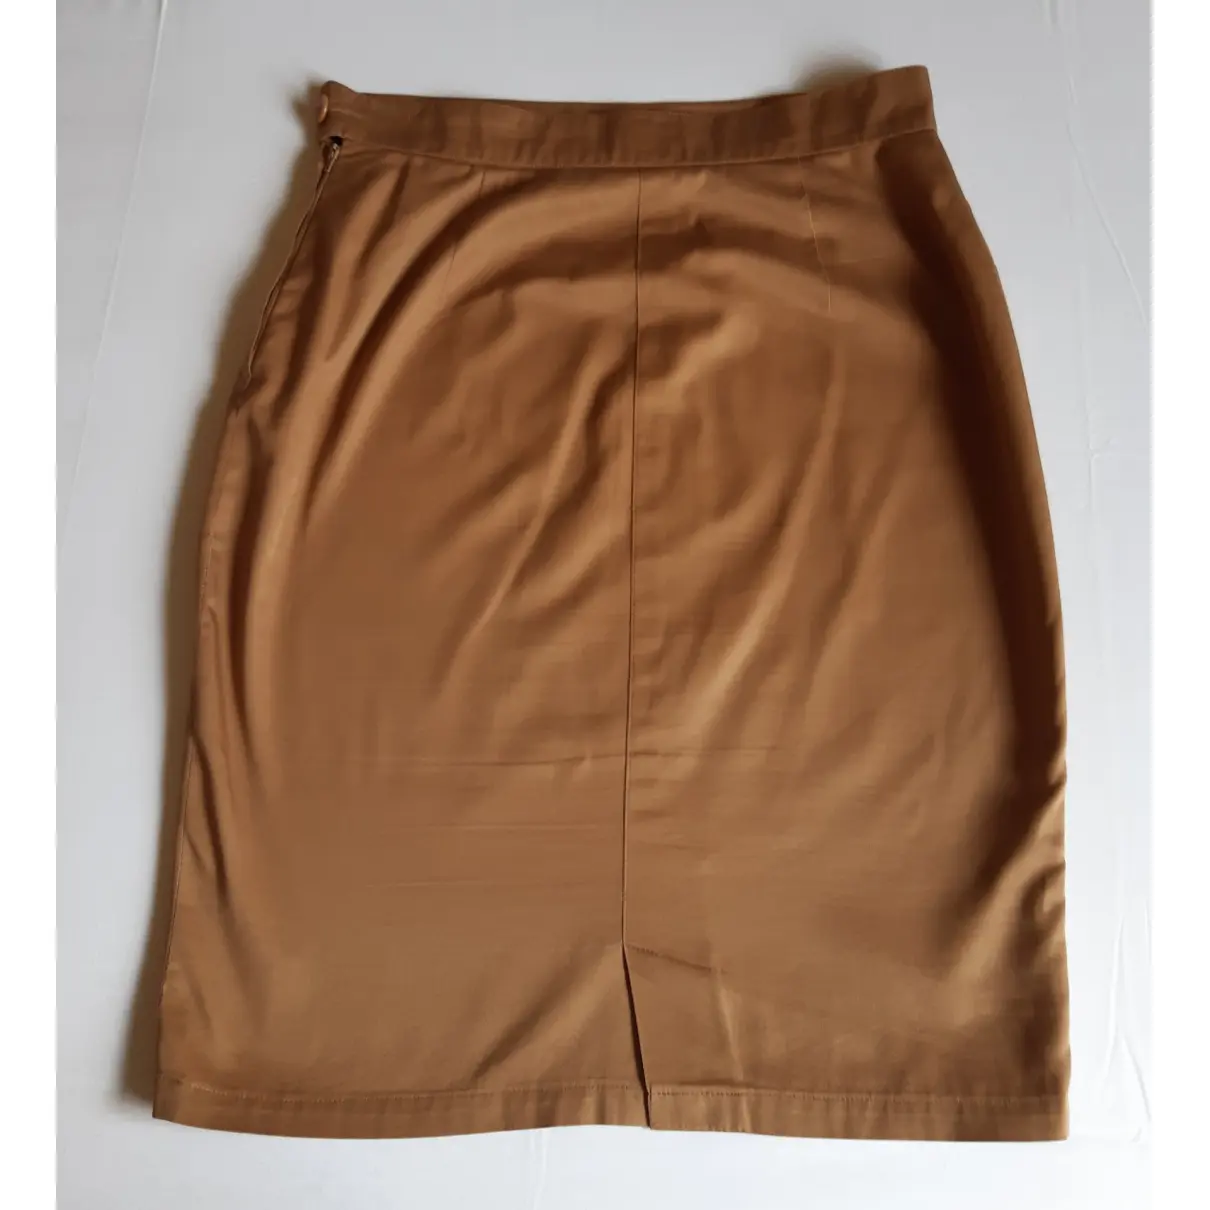 Buy Genny Mid-length skirt online